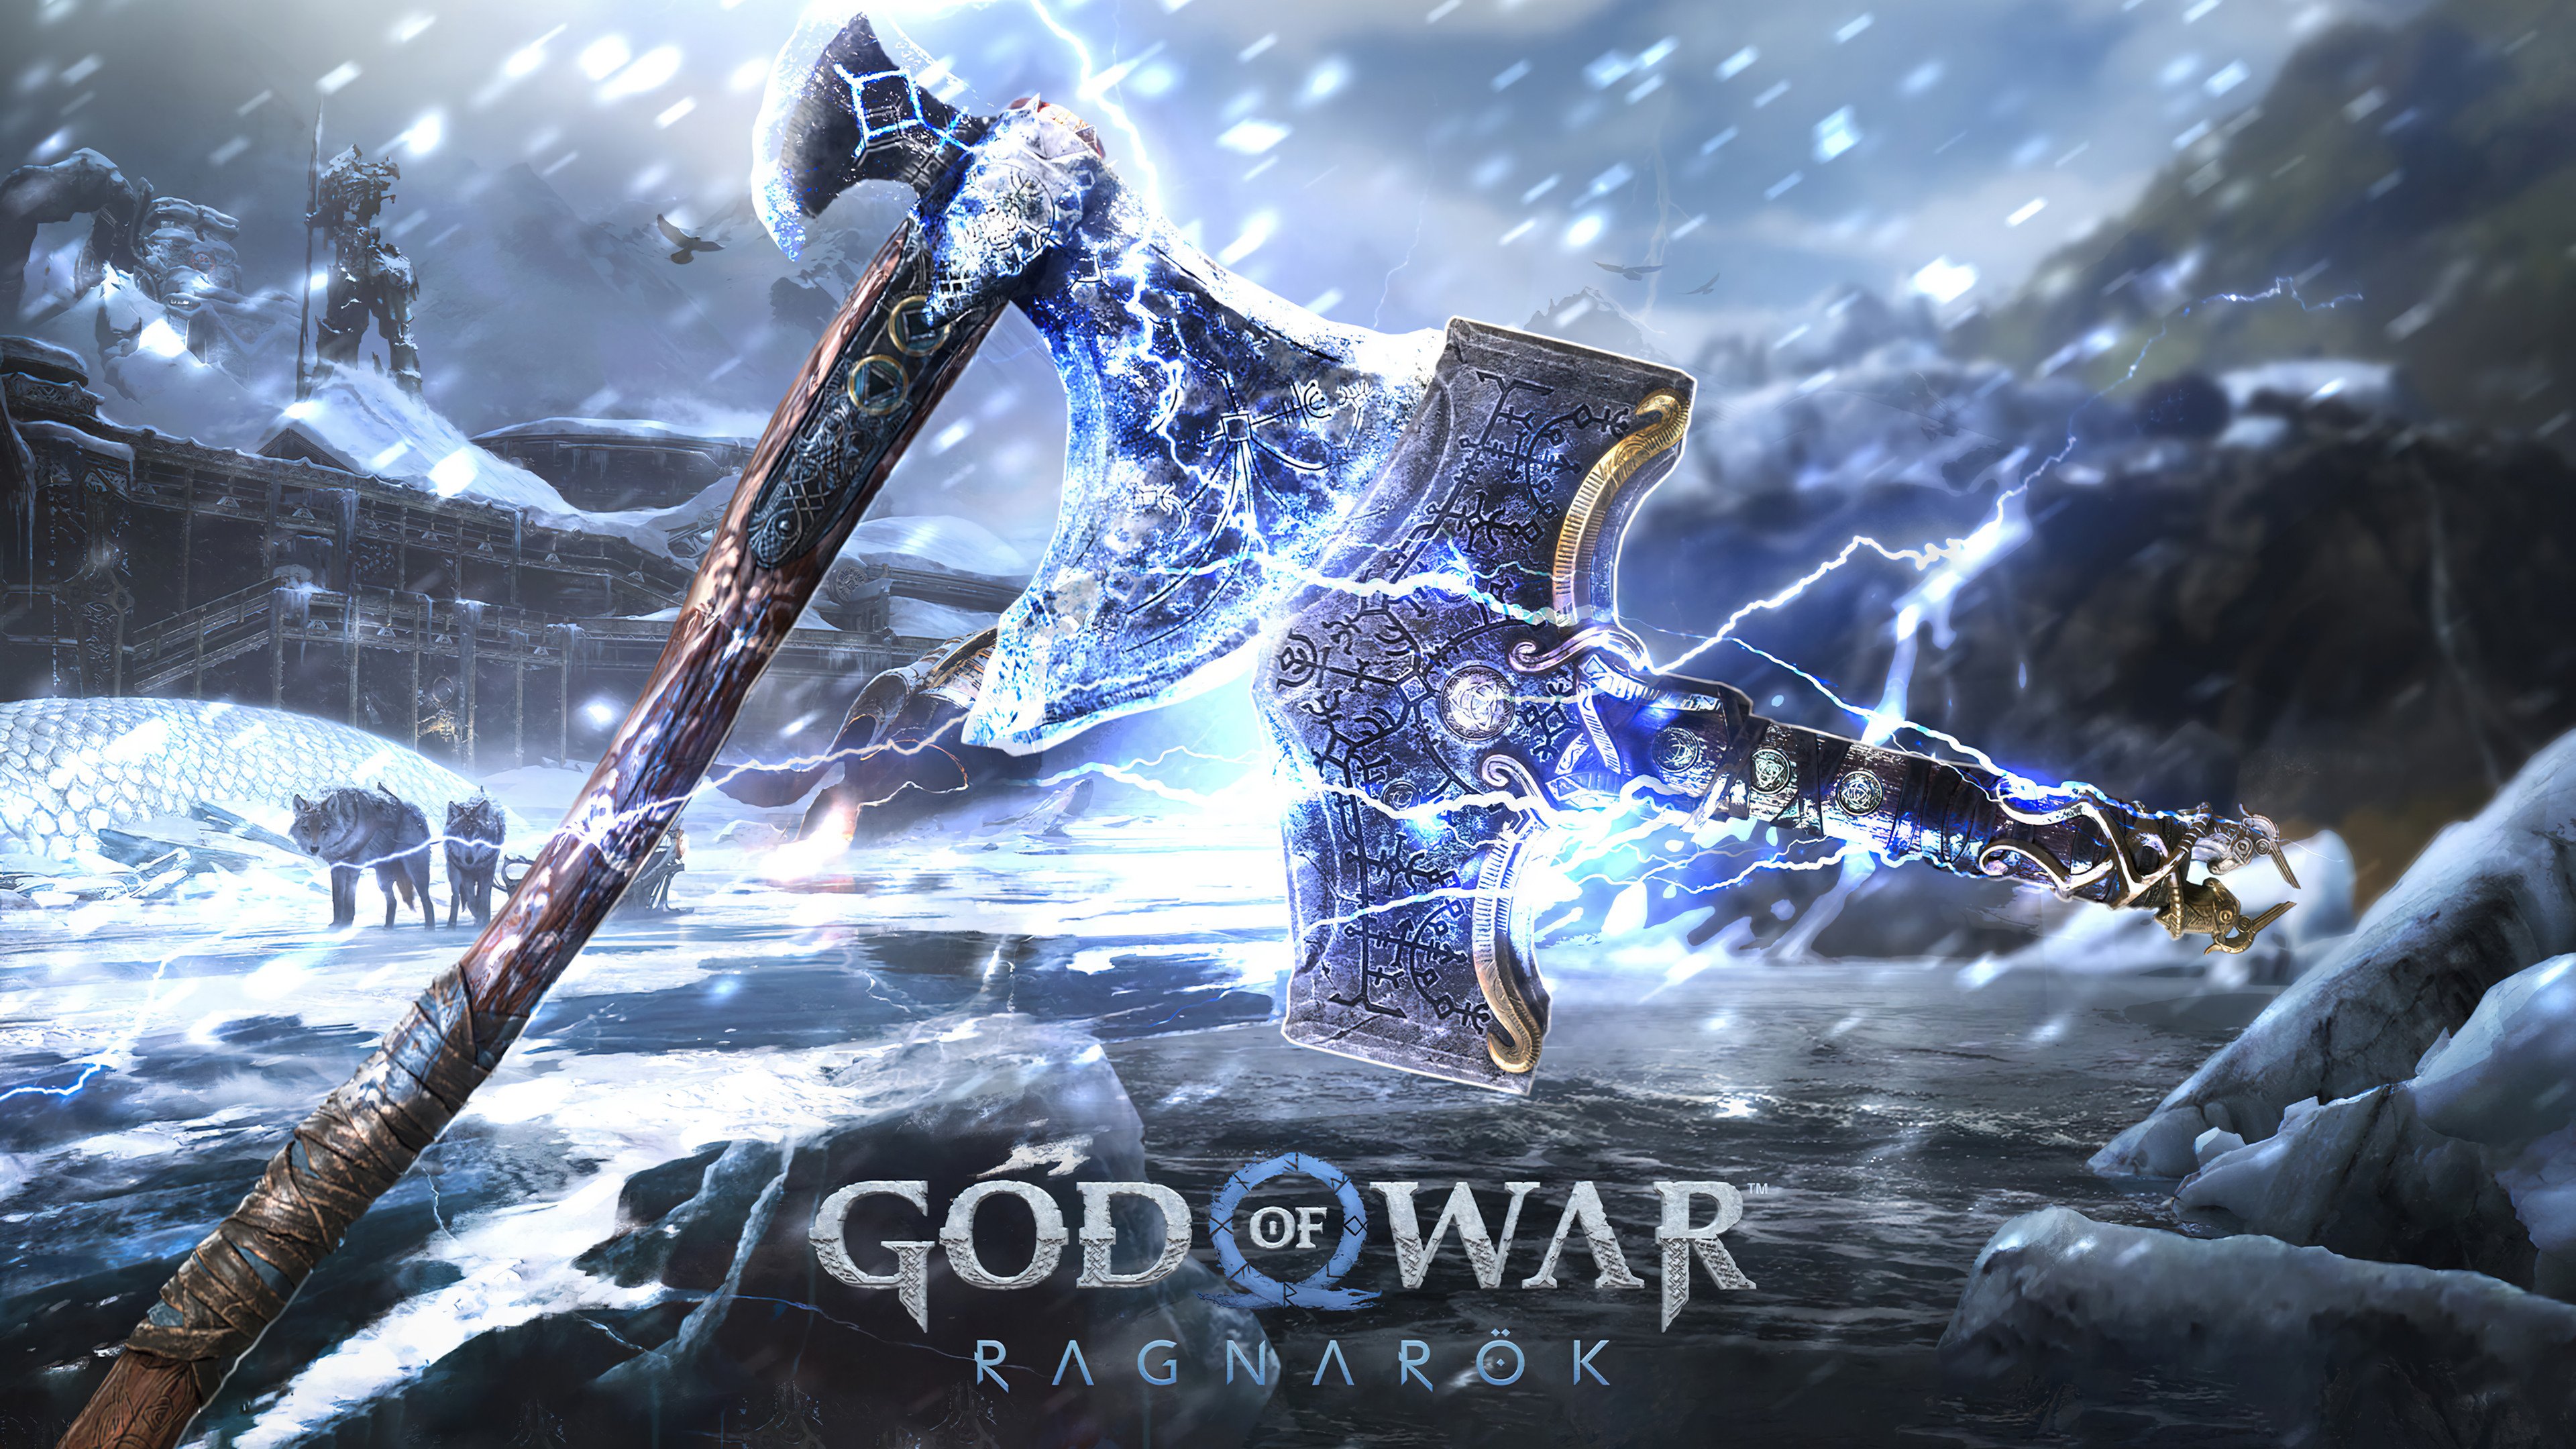 Poster of Kratos God of War Ragnarök Wallpaper HD Games 4K Wallpapers  Images Photos and Background  Wallpapers Den